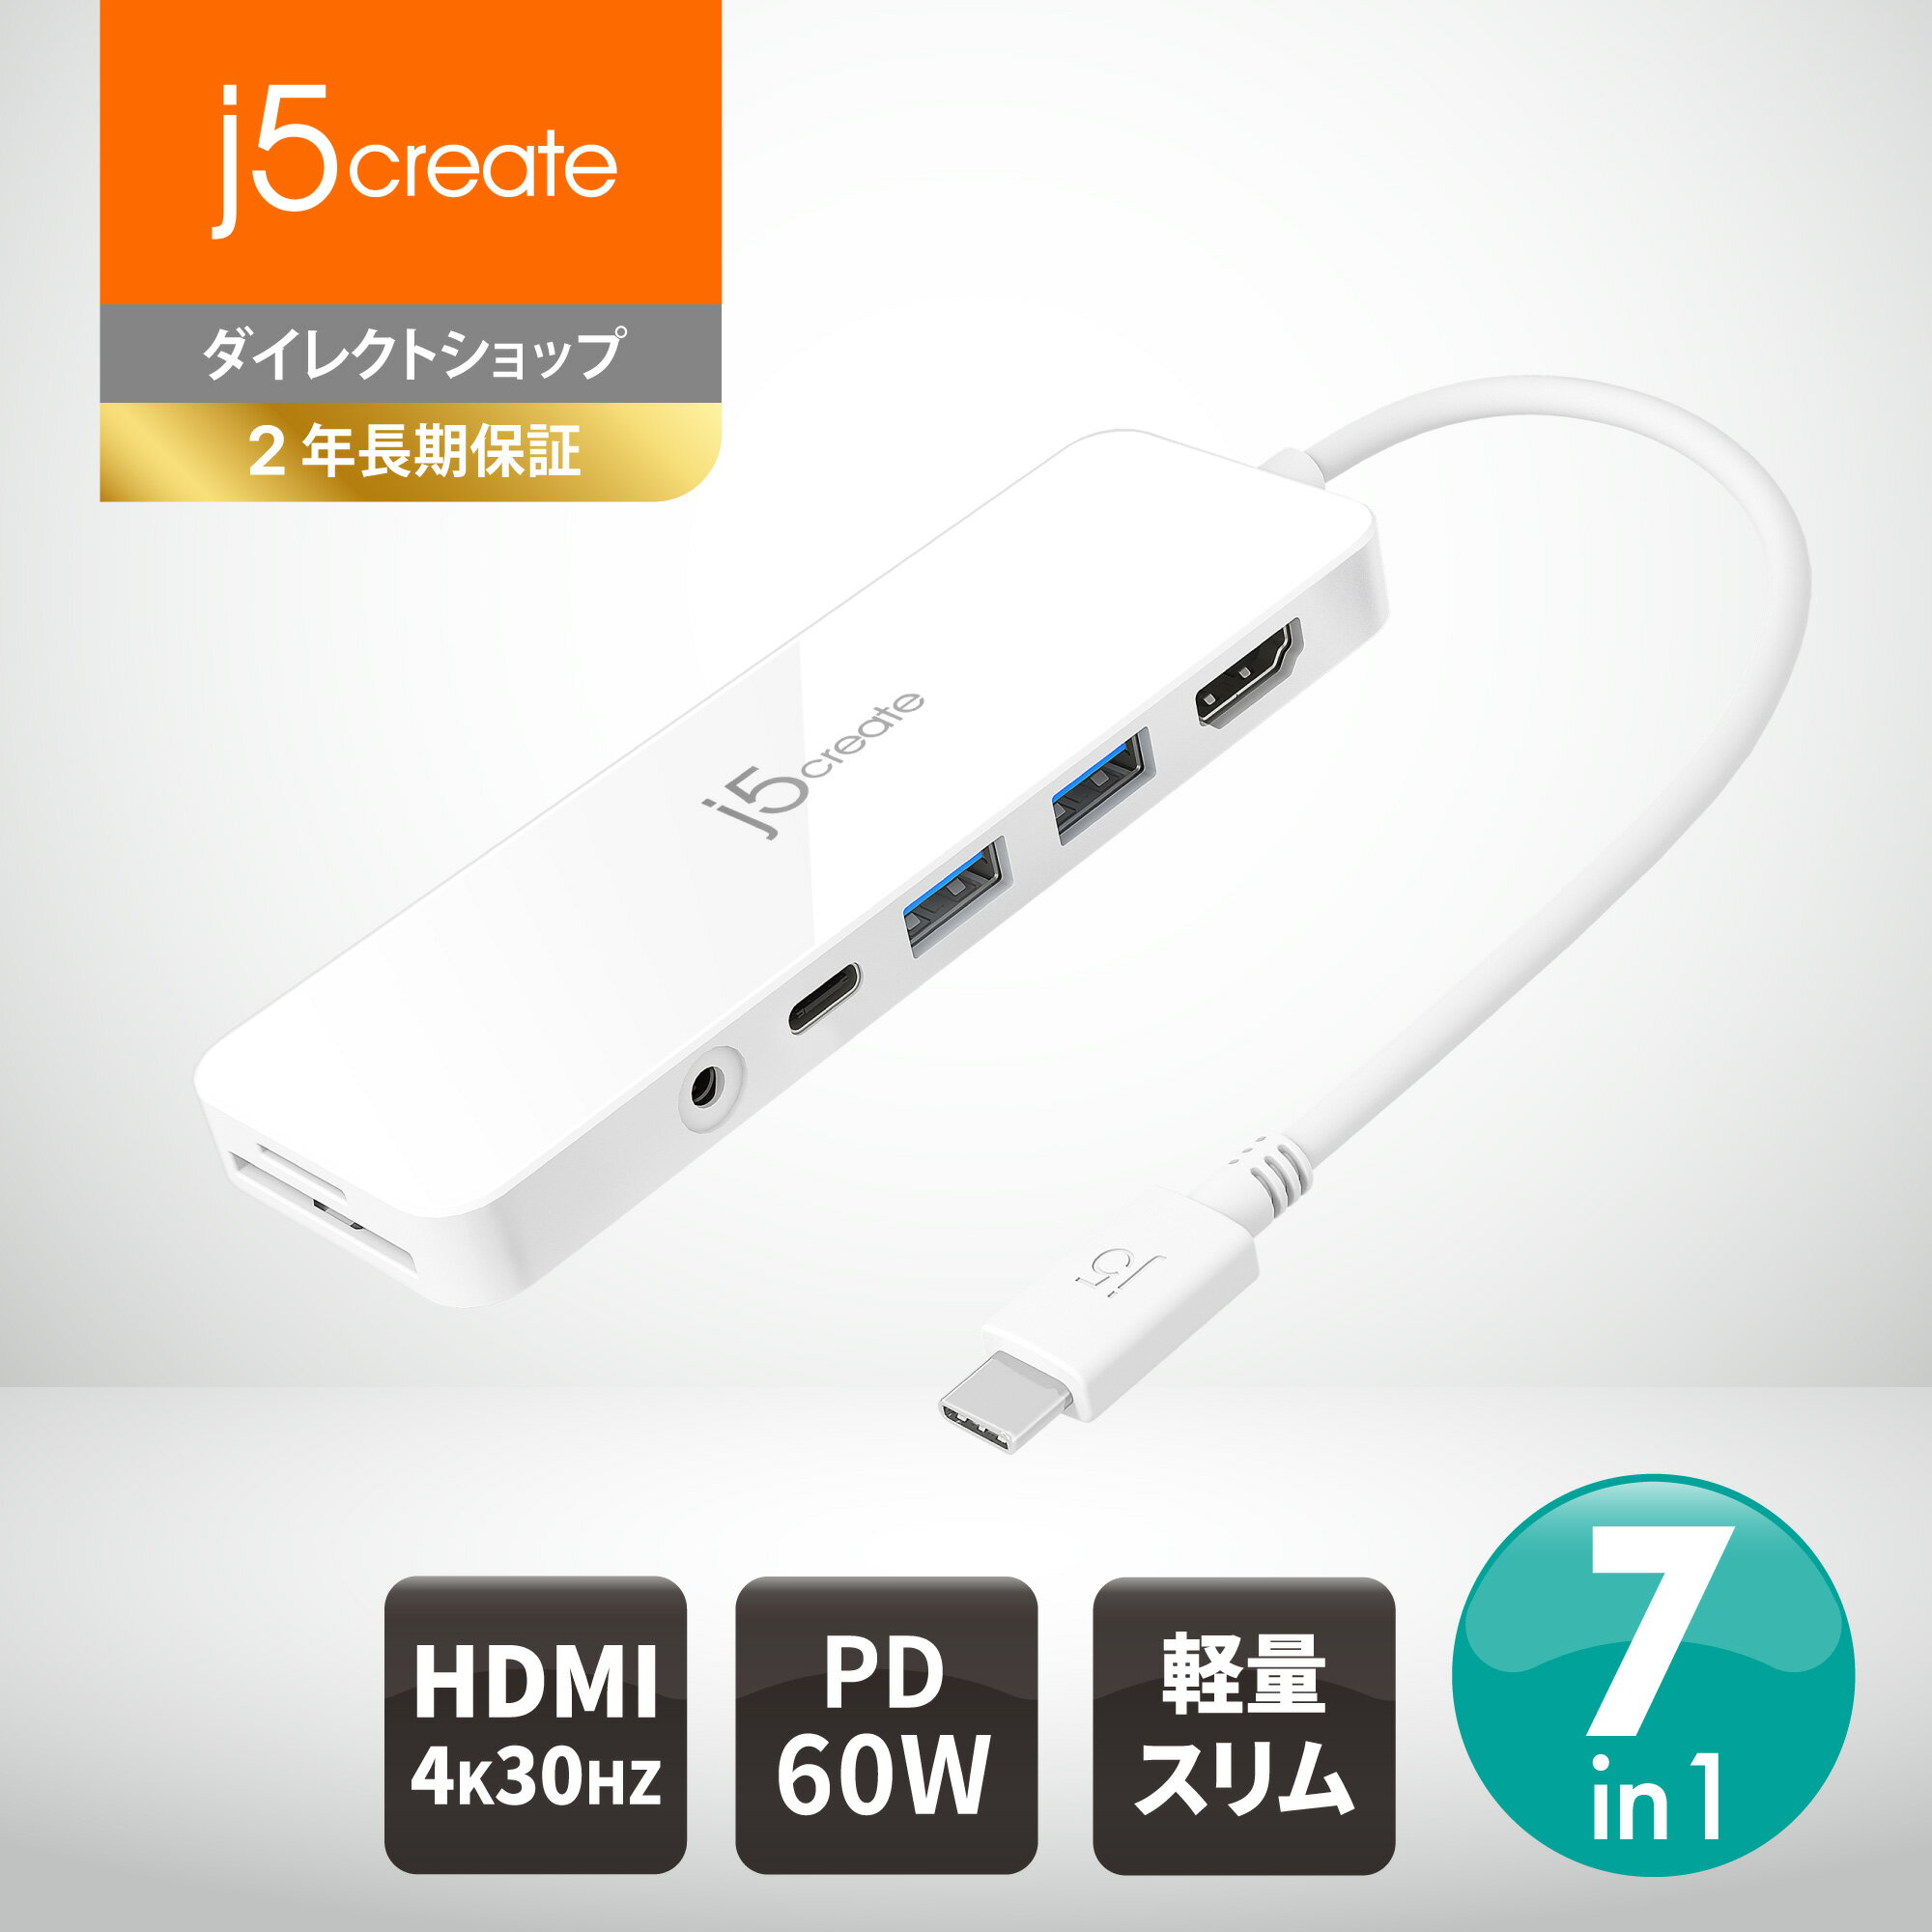 j5create USB Type-C 7in1 マルチアダプタ ハブ Power Delivery 60W供給 DisplayPort Alt Mode対応 Windows/Mac/Chrome/iPad pro対応 Type-C機器に対応 JCD373-EJ